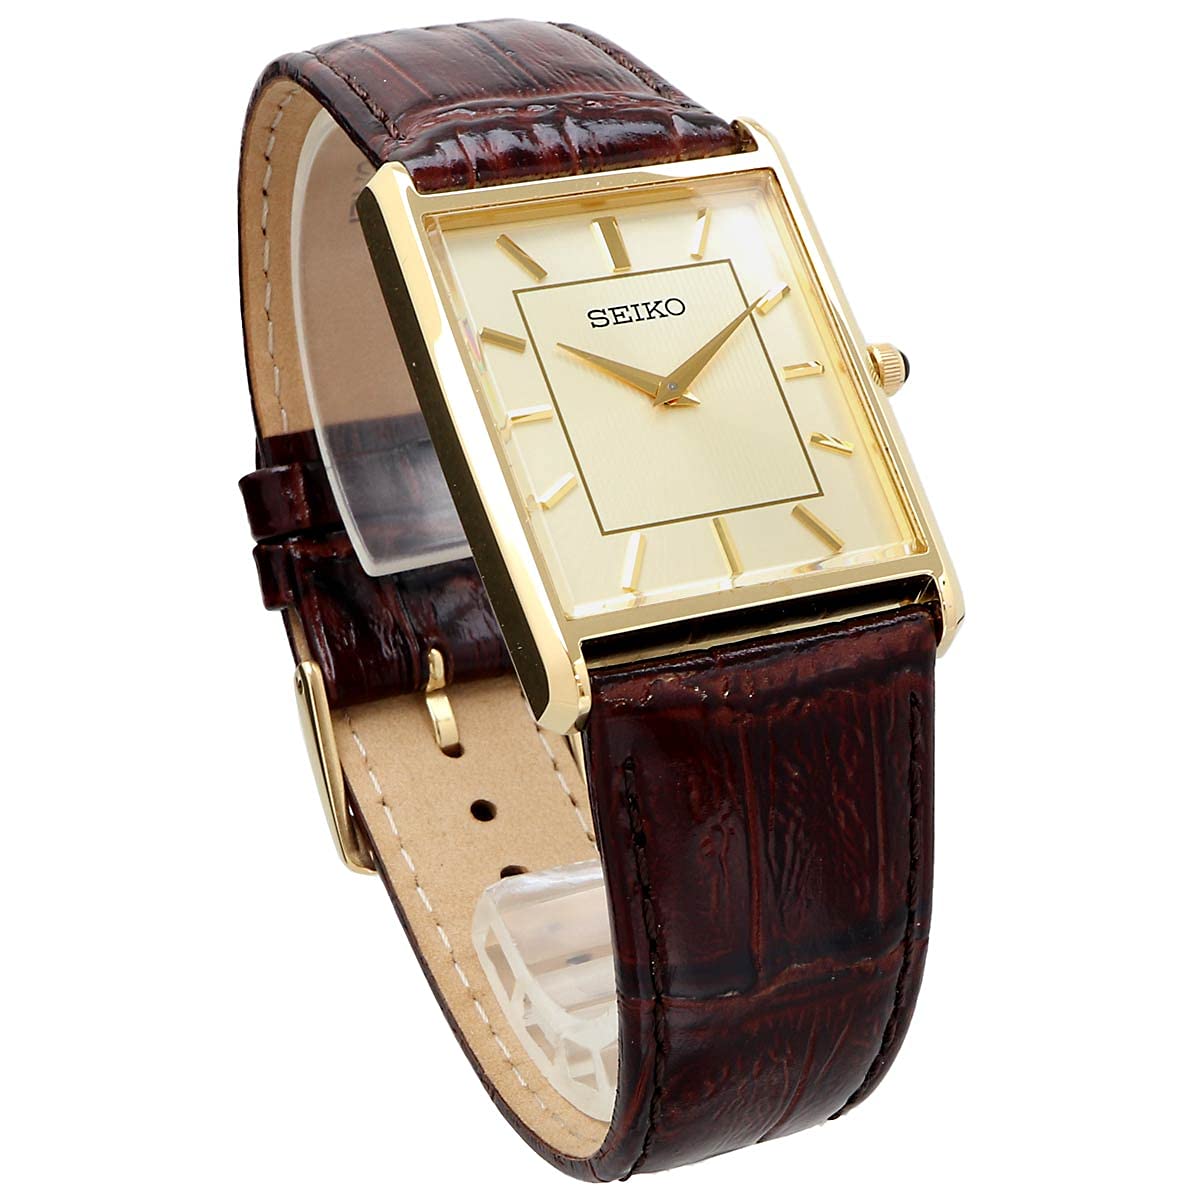 Seiko SWR064 Men's Wristwatch, Square Design, Quartz, Champagne Gold Dial x Brown Leather Band